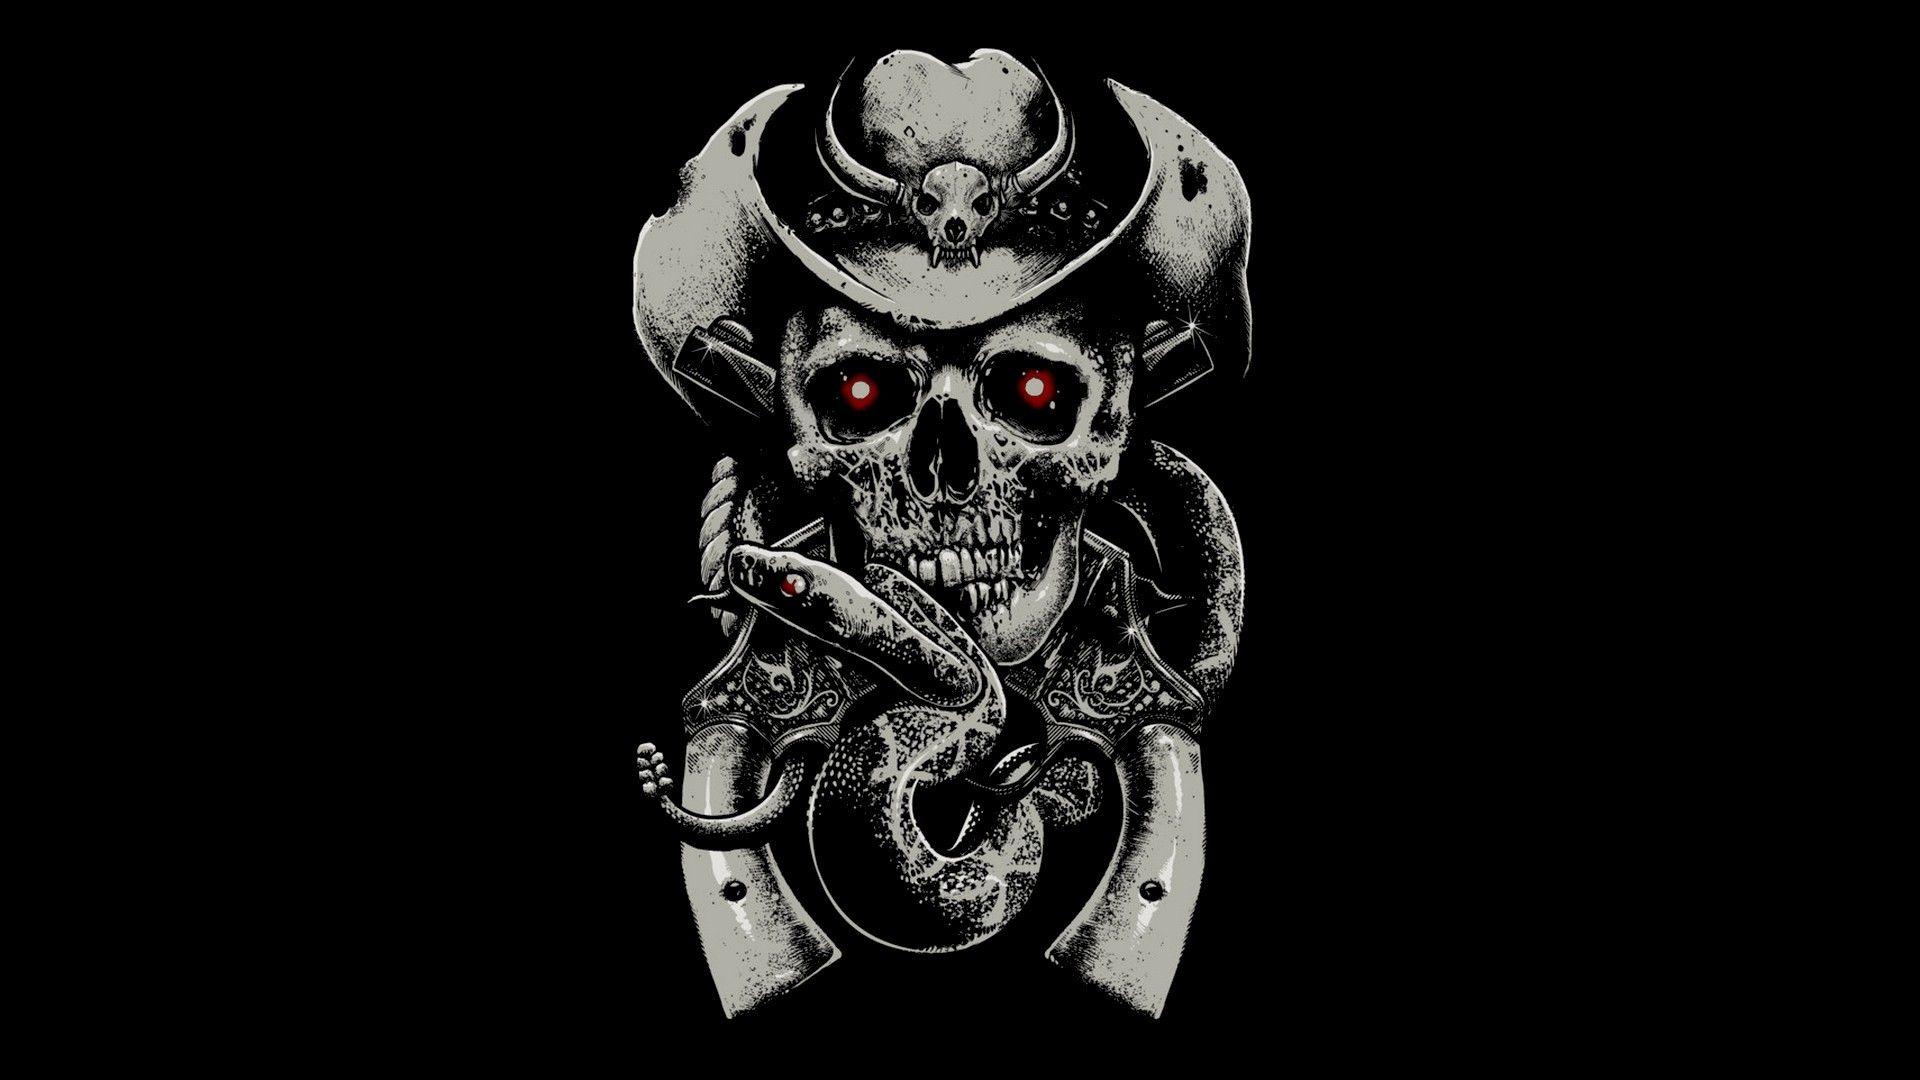 Download Wallpaper 1920x1080 skull, fear, hat, guns, snake